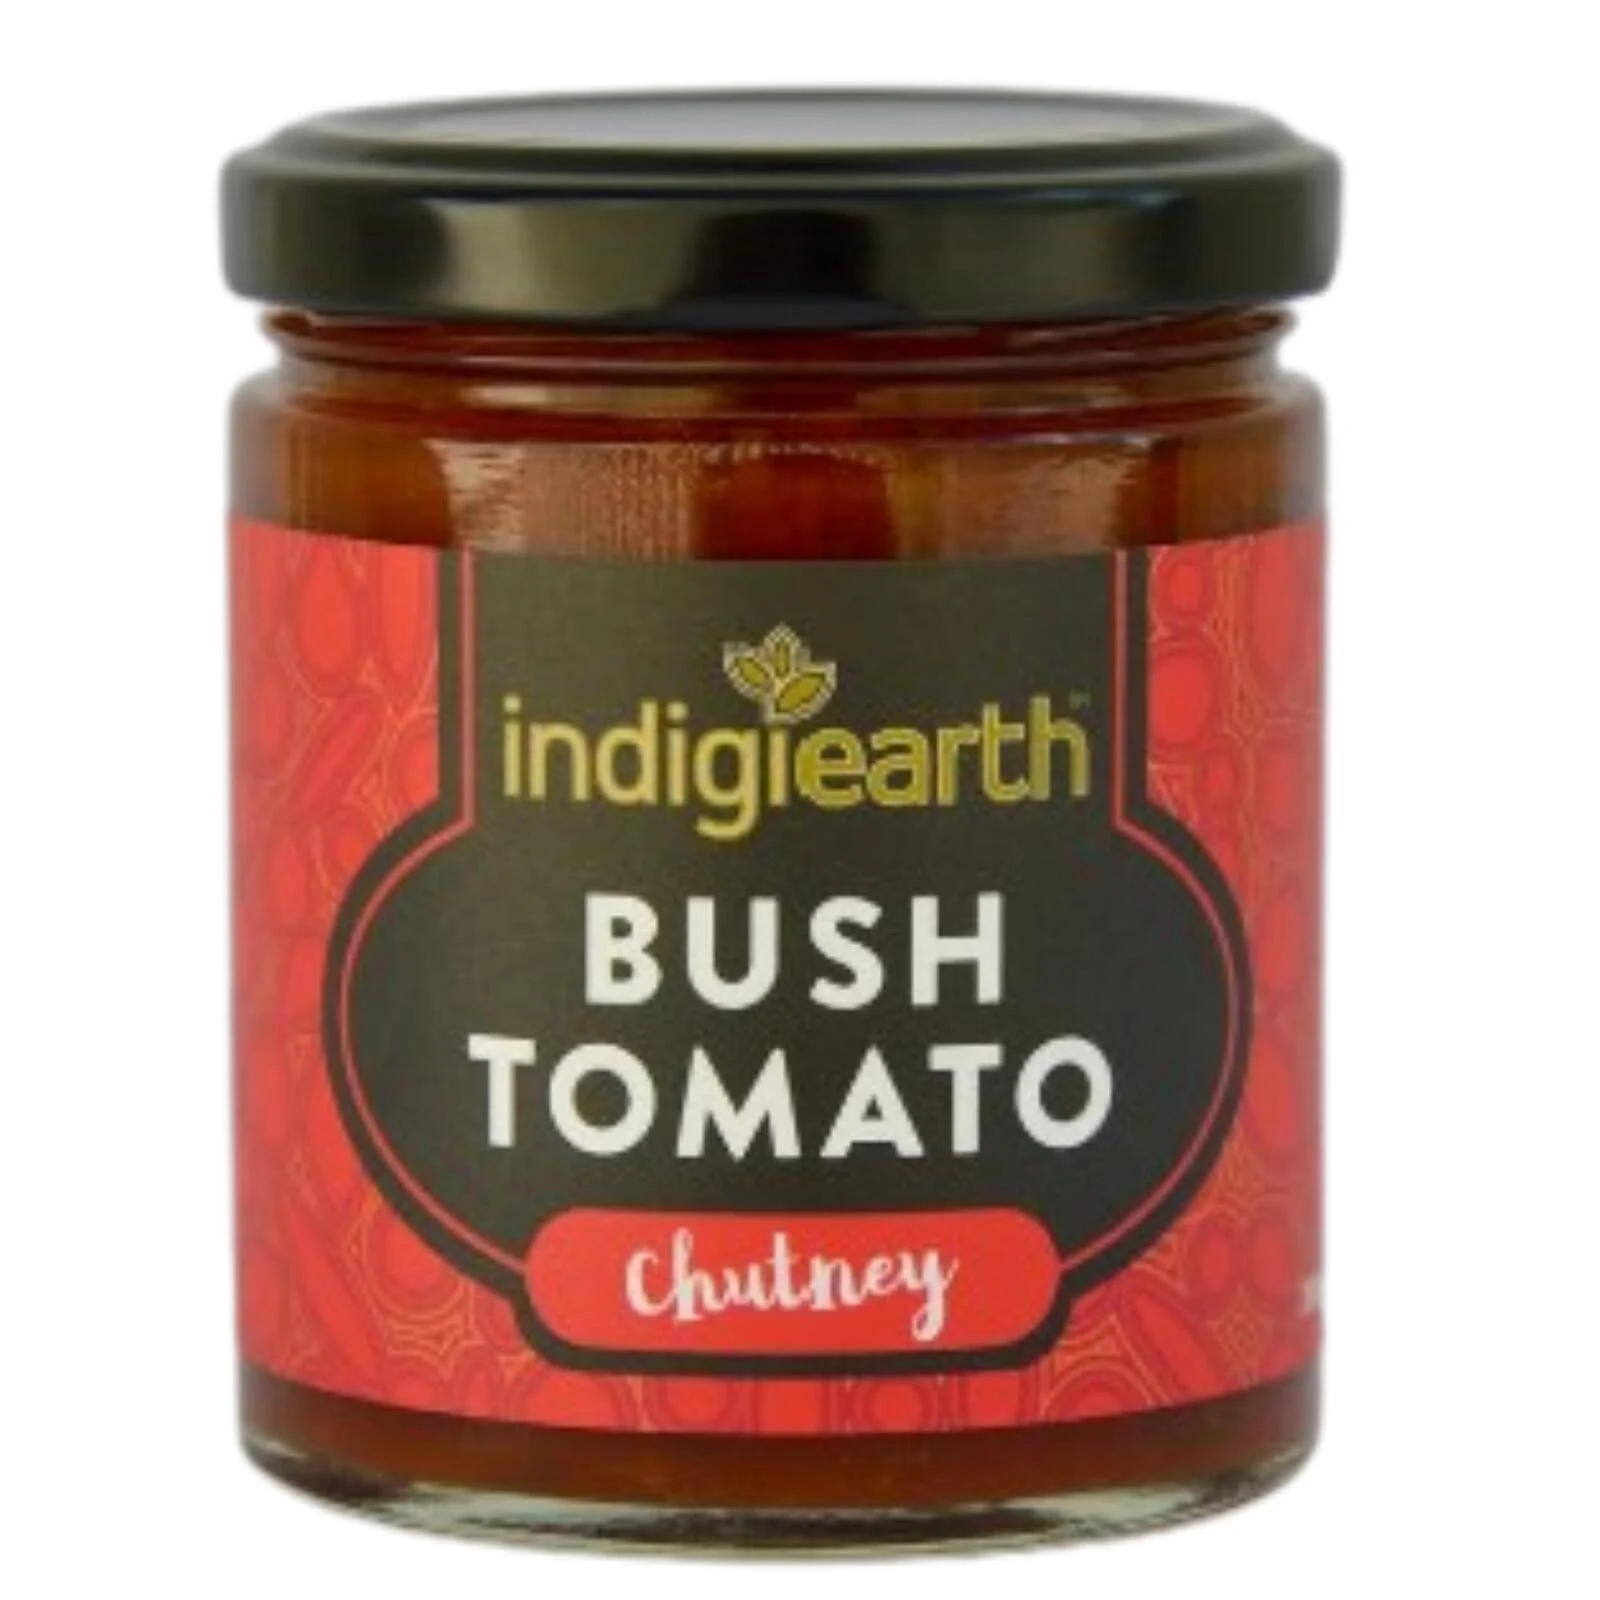 Indigiearth Bush Tomato Chutney 200g 